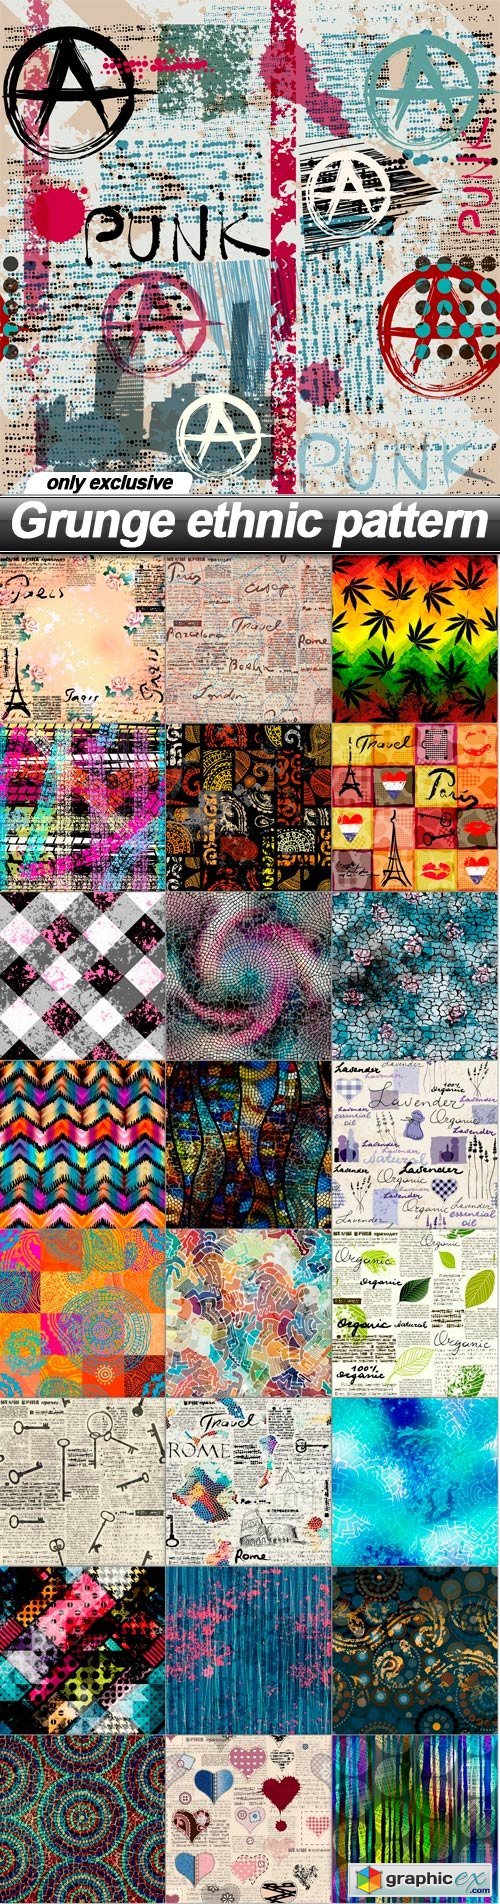 Grunge ethnic pattern - 25 EPS